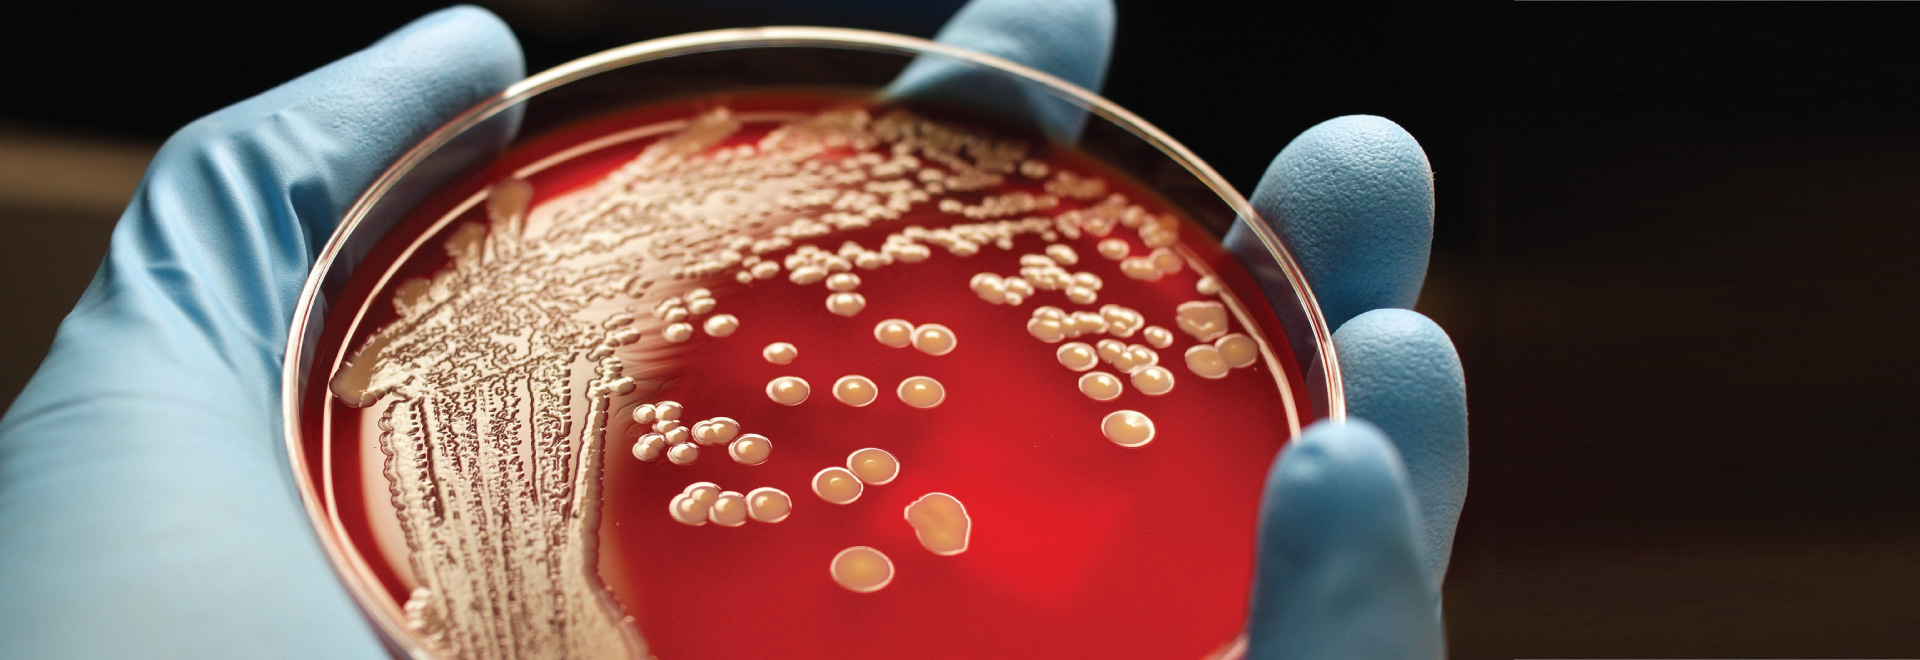 staphylococcus-aureus-infection-causes-symptoms-prevention-dsk